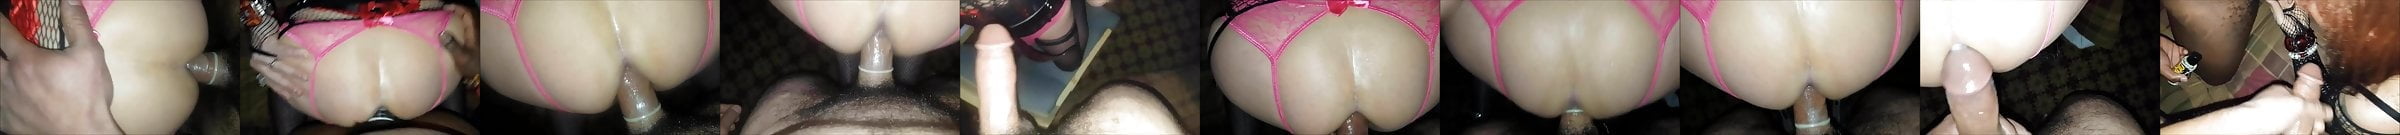 Brazilian Crossdresser Fucked By Big Cock Tranny Porn A8